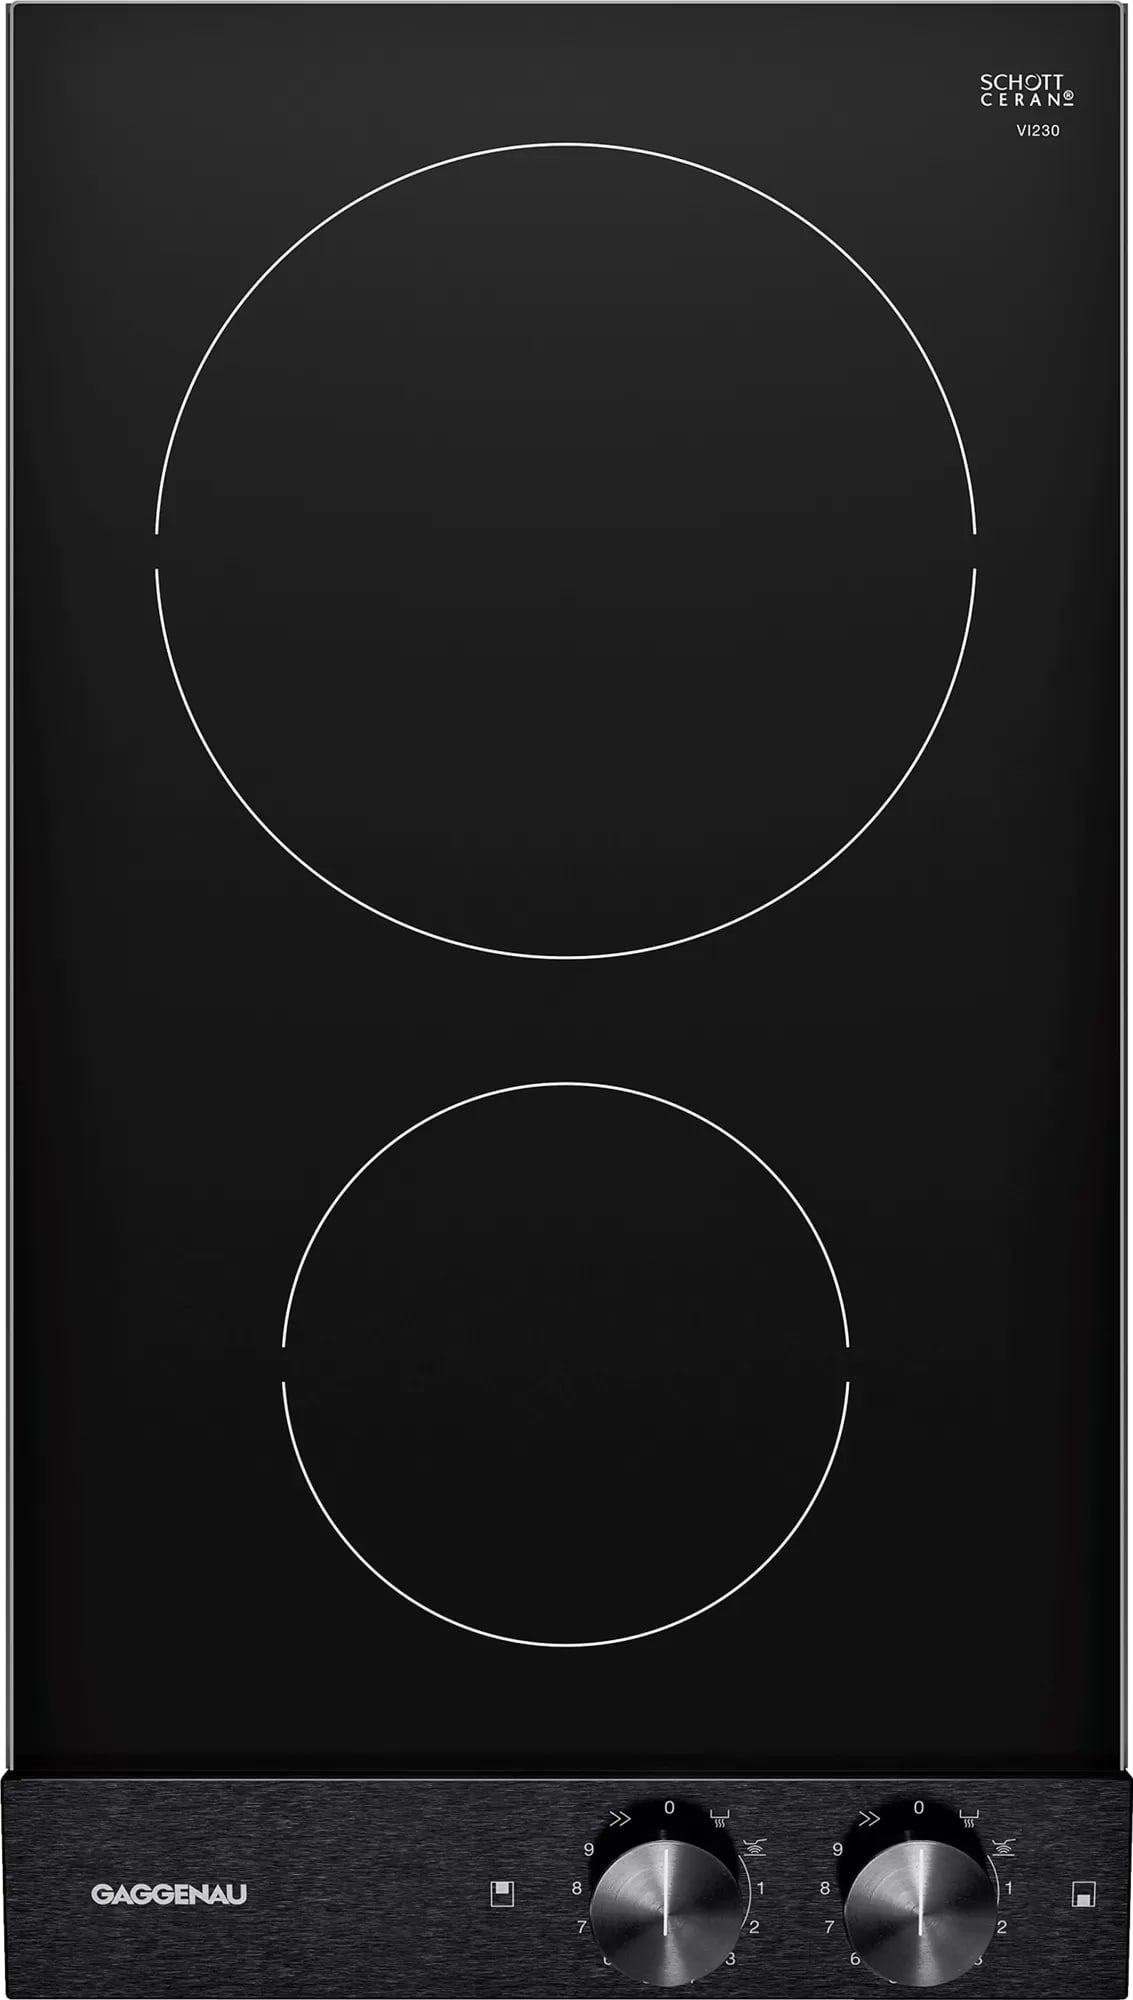 Gaggenau - 11.3125 inch wide Induction Cooktop in Black - VI230620